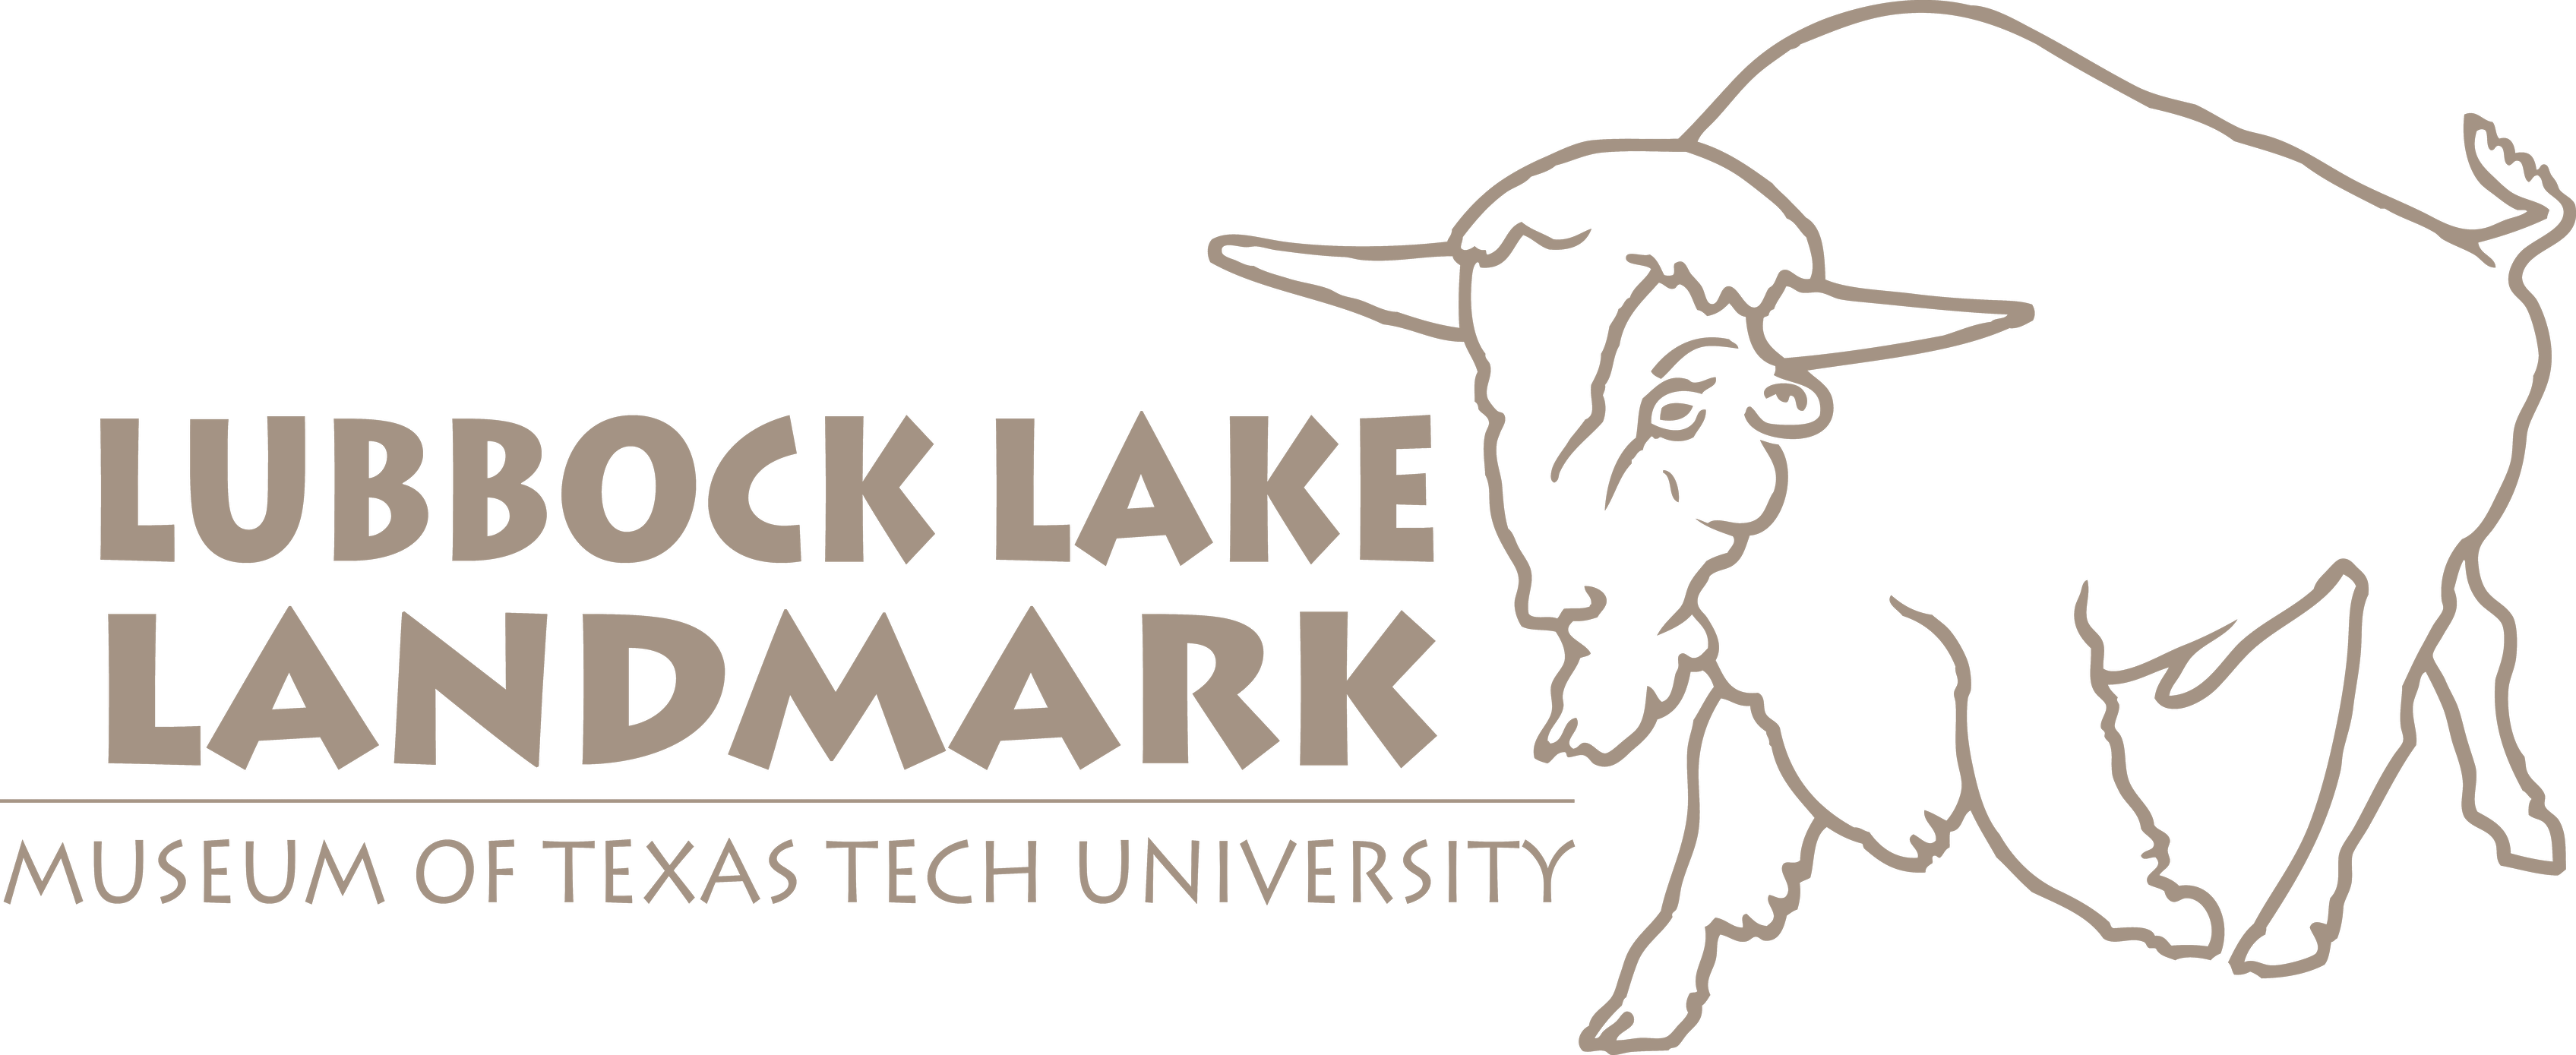 Lubbock Lake Landmark home page